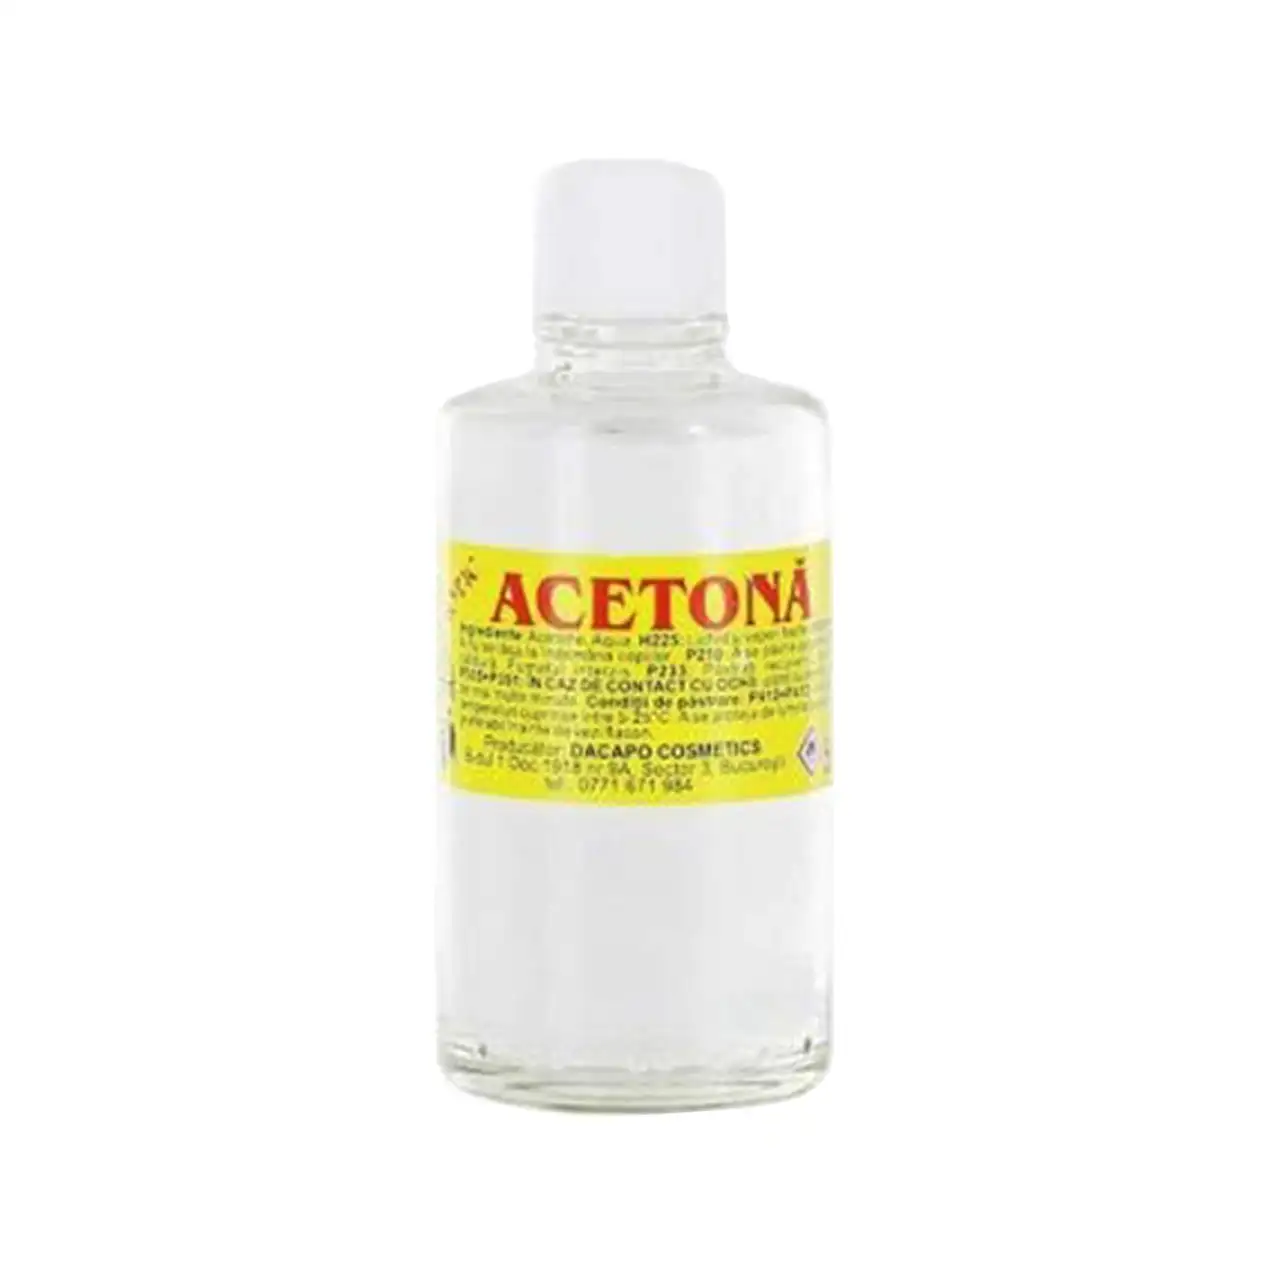 acetona c3h6o pura 50 ml 2